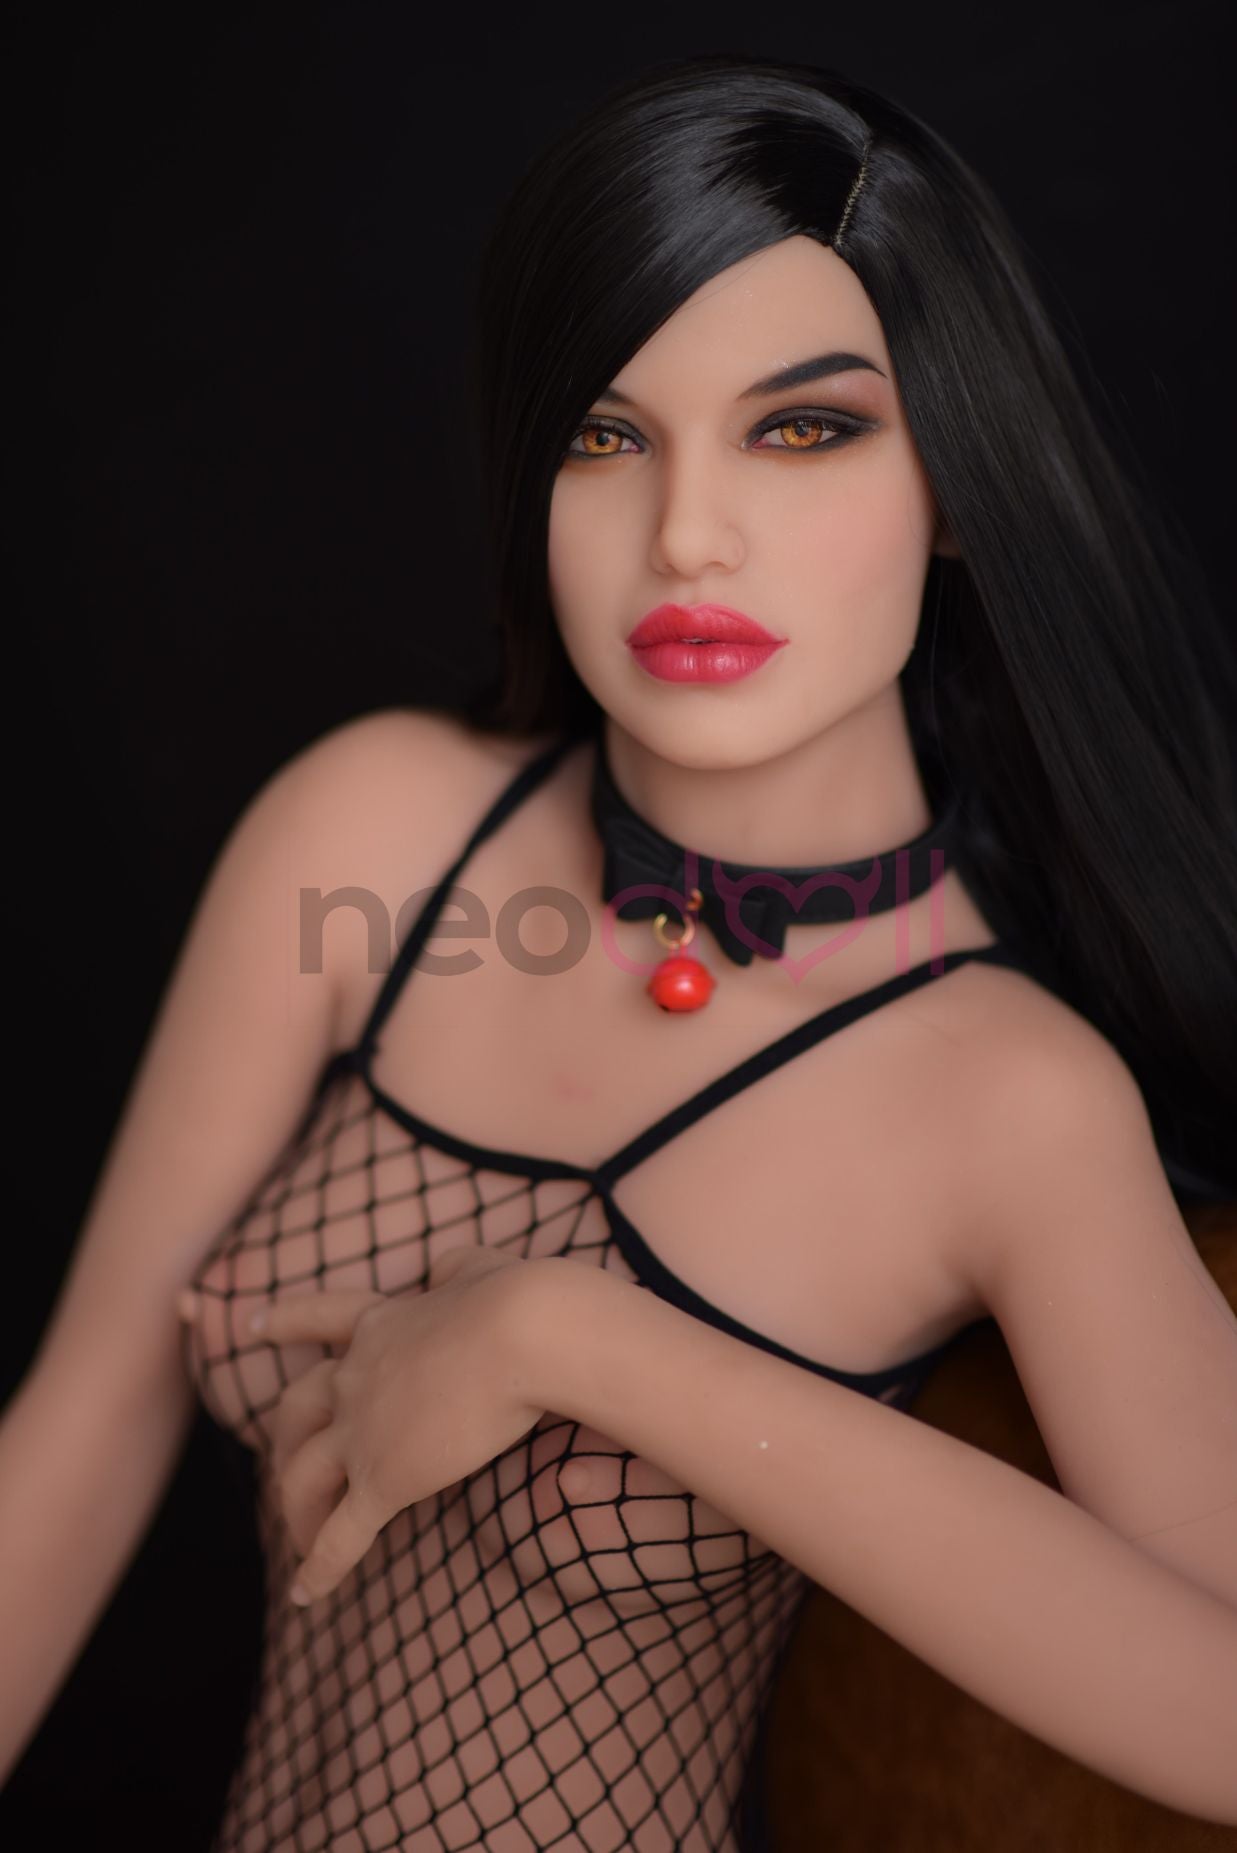 Neodoll Allure Vivian - Realistic Sex Doll -158cm - Tan